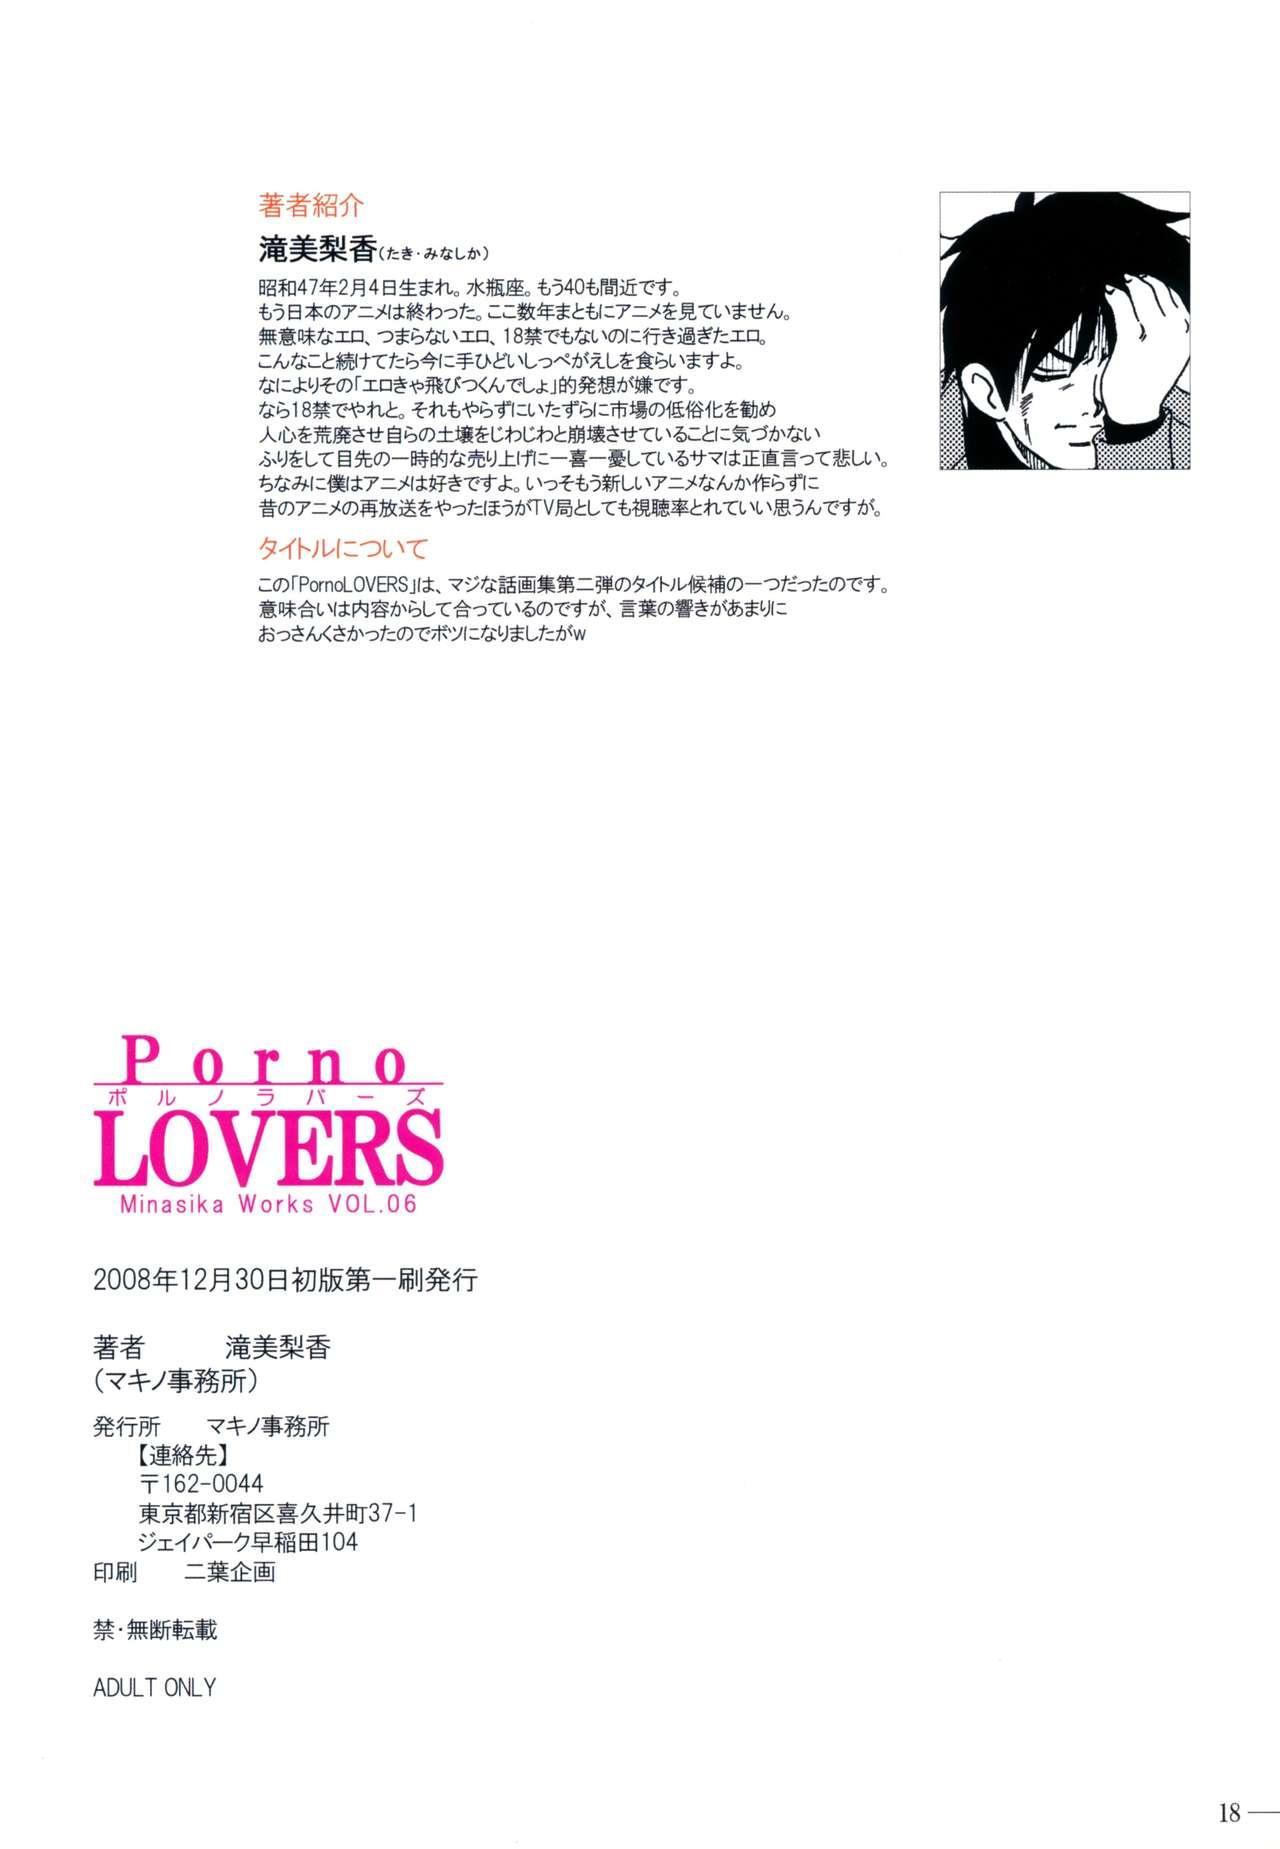 Porno Lovers - Minashika Works Vol. 06 17